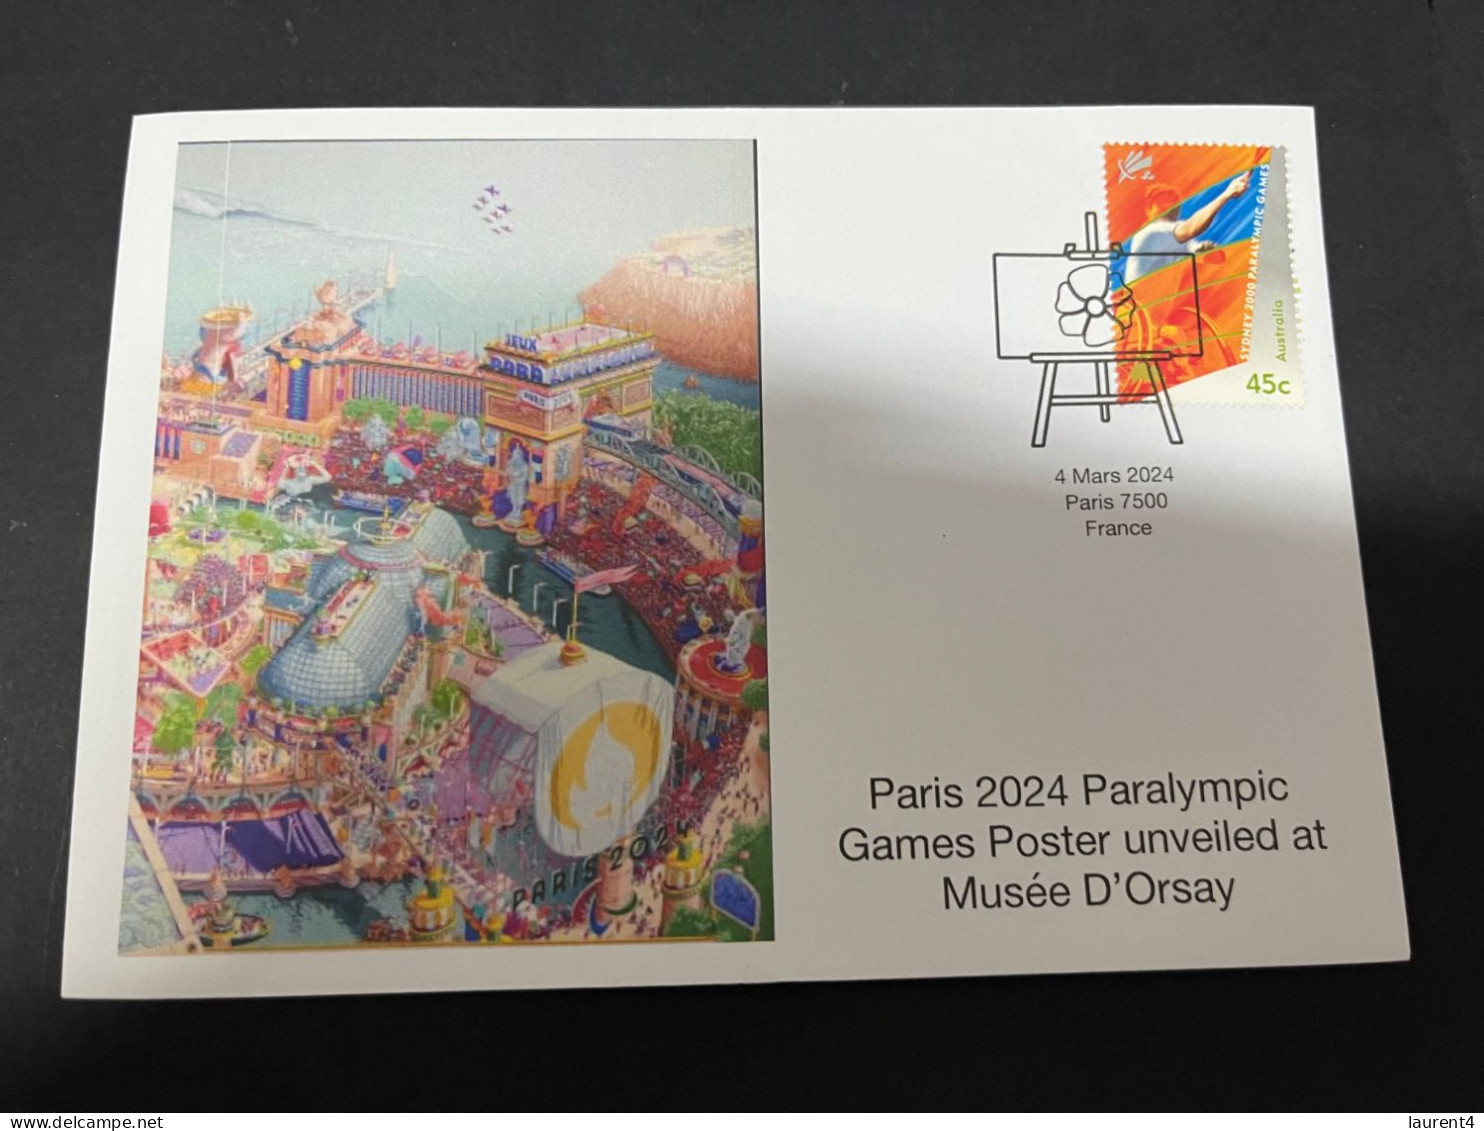 6-3-2024 (2 Y 17) Paris Olympic Games 2024 - 2 Olympic Games Posters Unveil At Musée D'Orsay (Paralympics) - Estate 2024 : Parigi